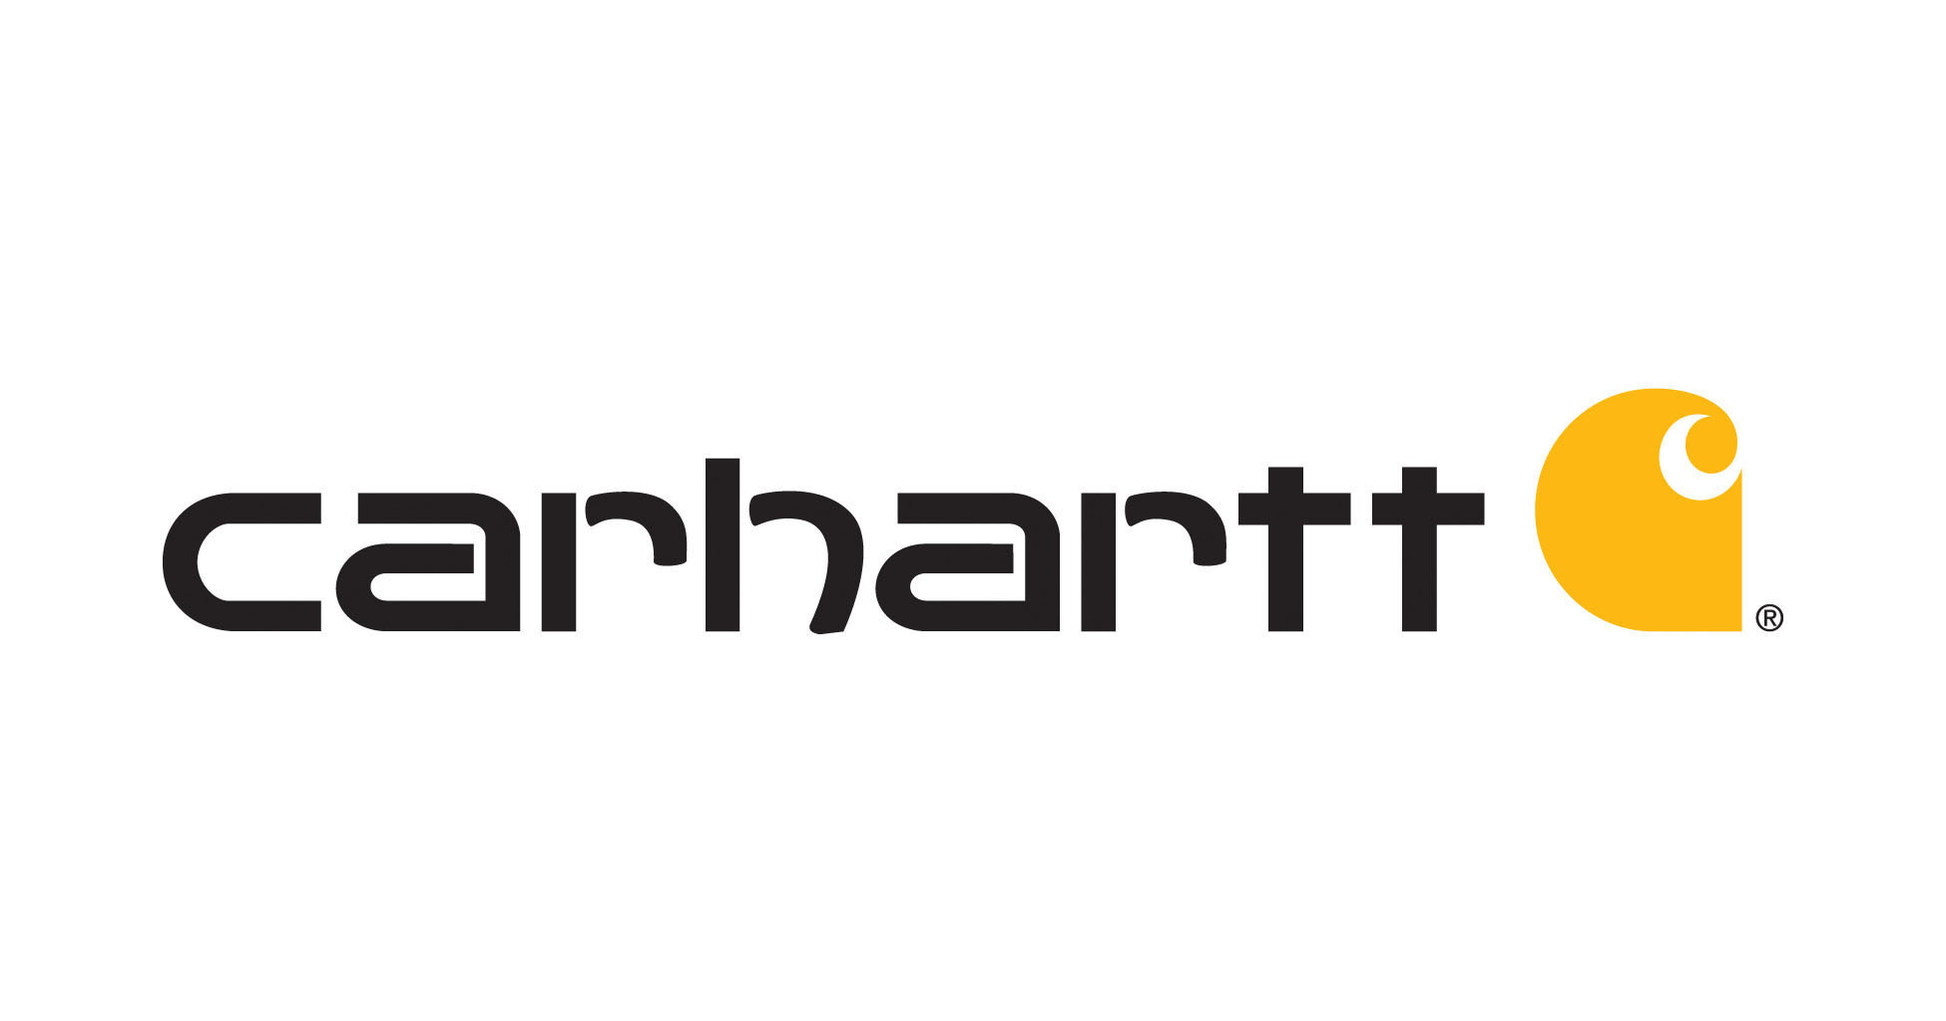 Carhartt Makes Iconic Workwear Available on Bitmoji